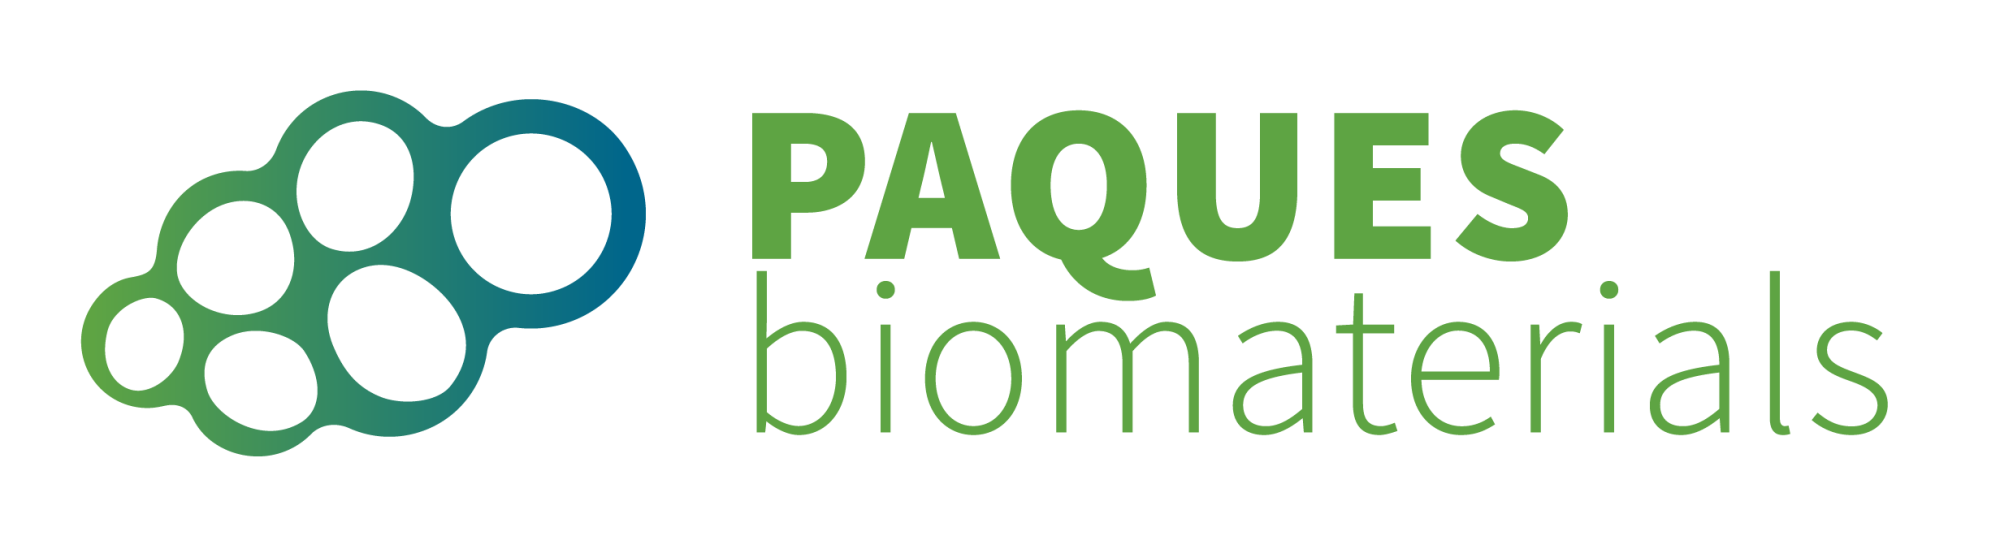 Paques Biomaterials logo groene letters met groen en blauw symbool